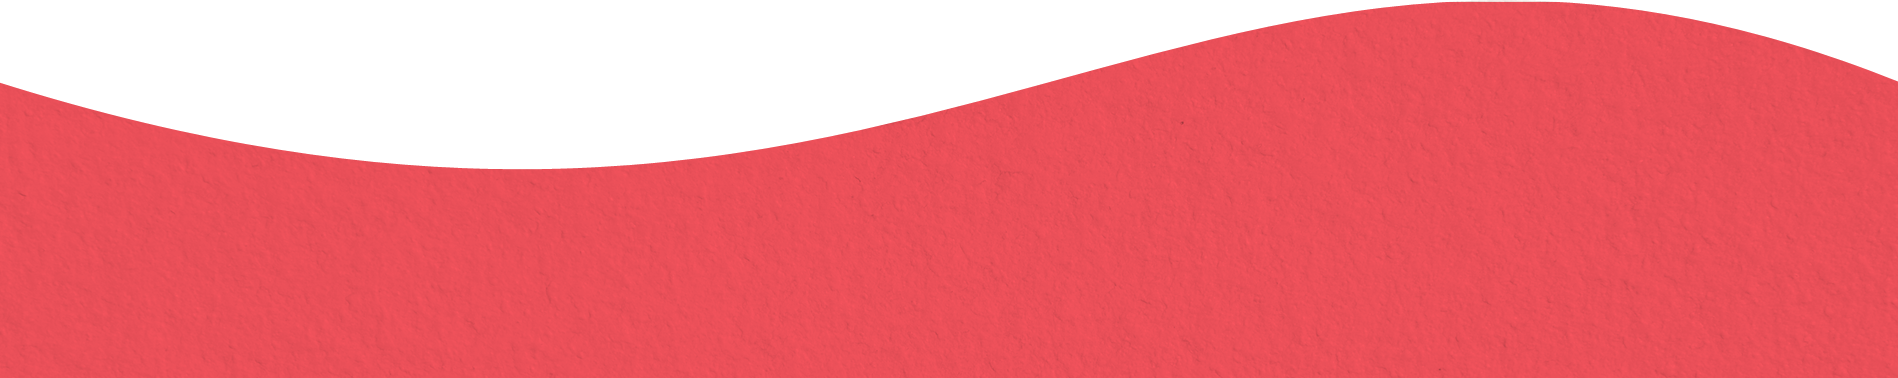 inn-pink-wave